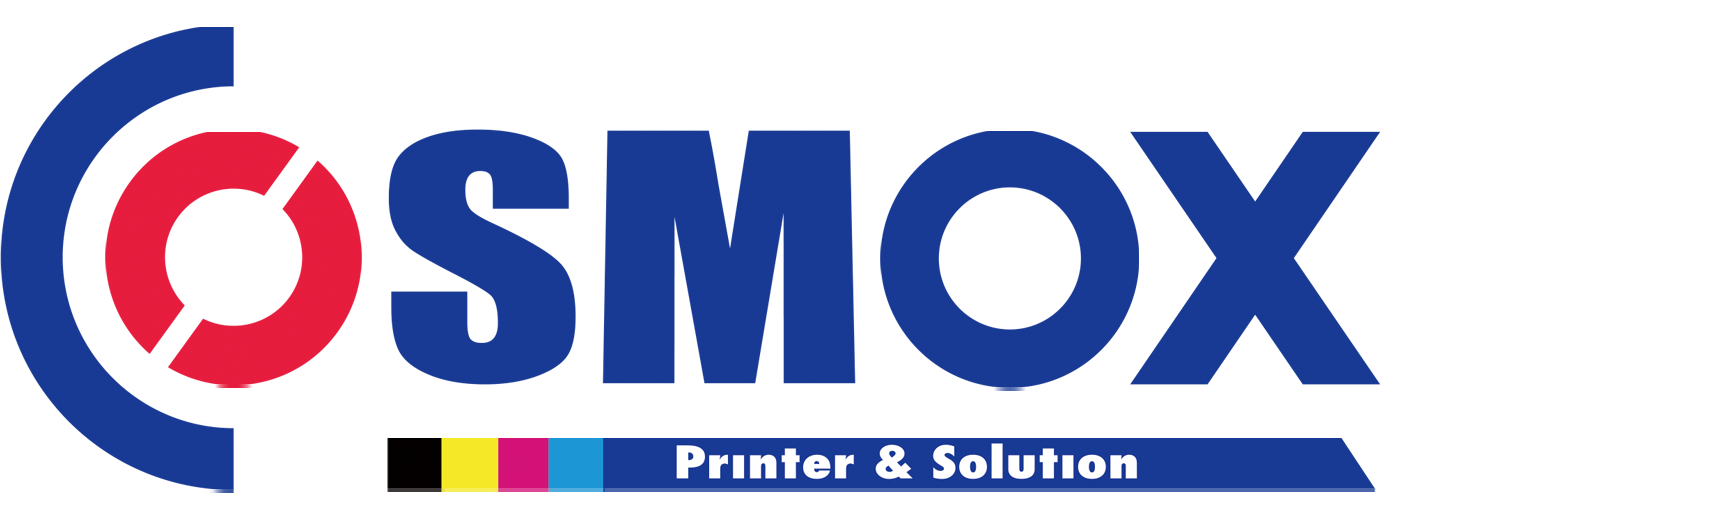 UV Printer, DTG and DTF Printer Manufacturer | Cosmox Group